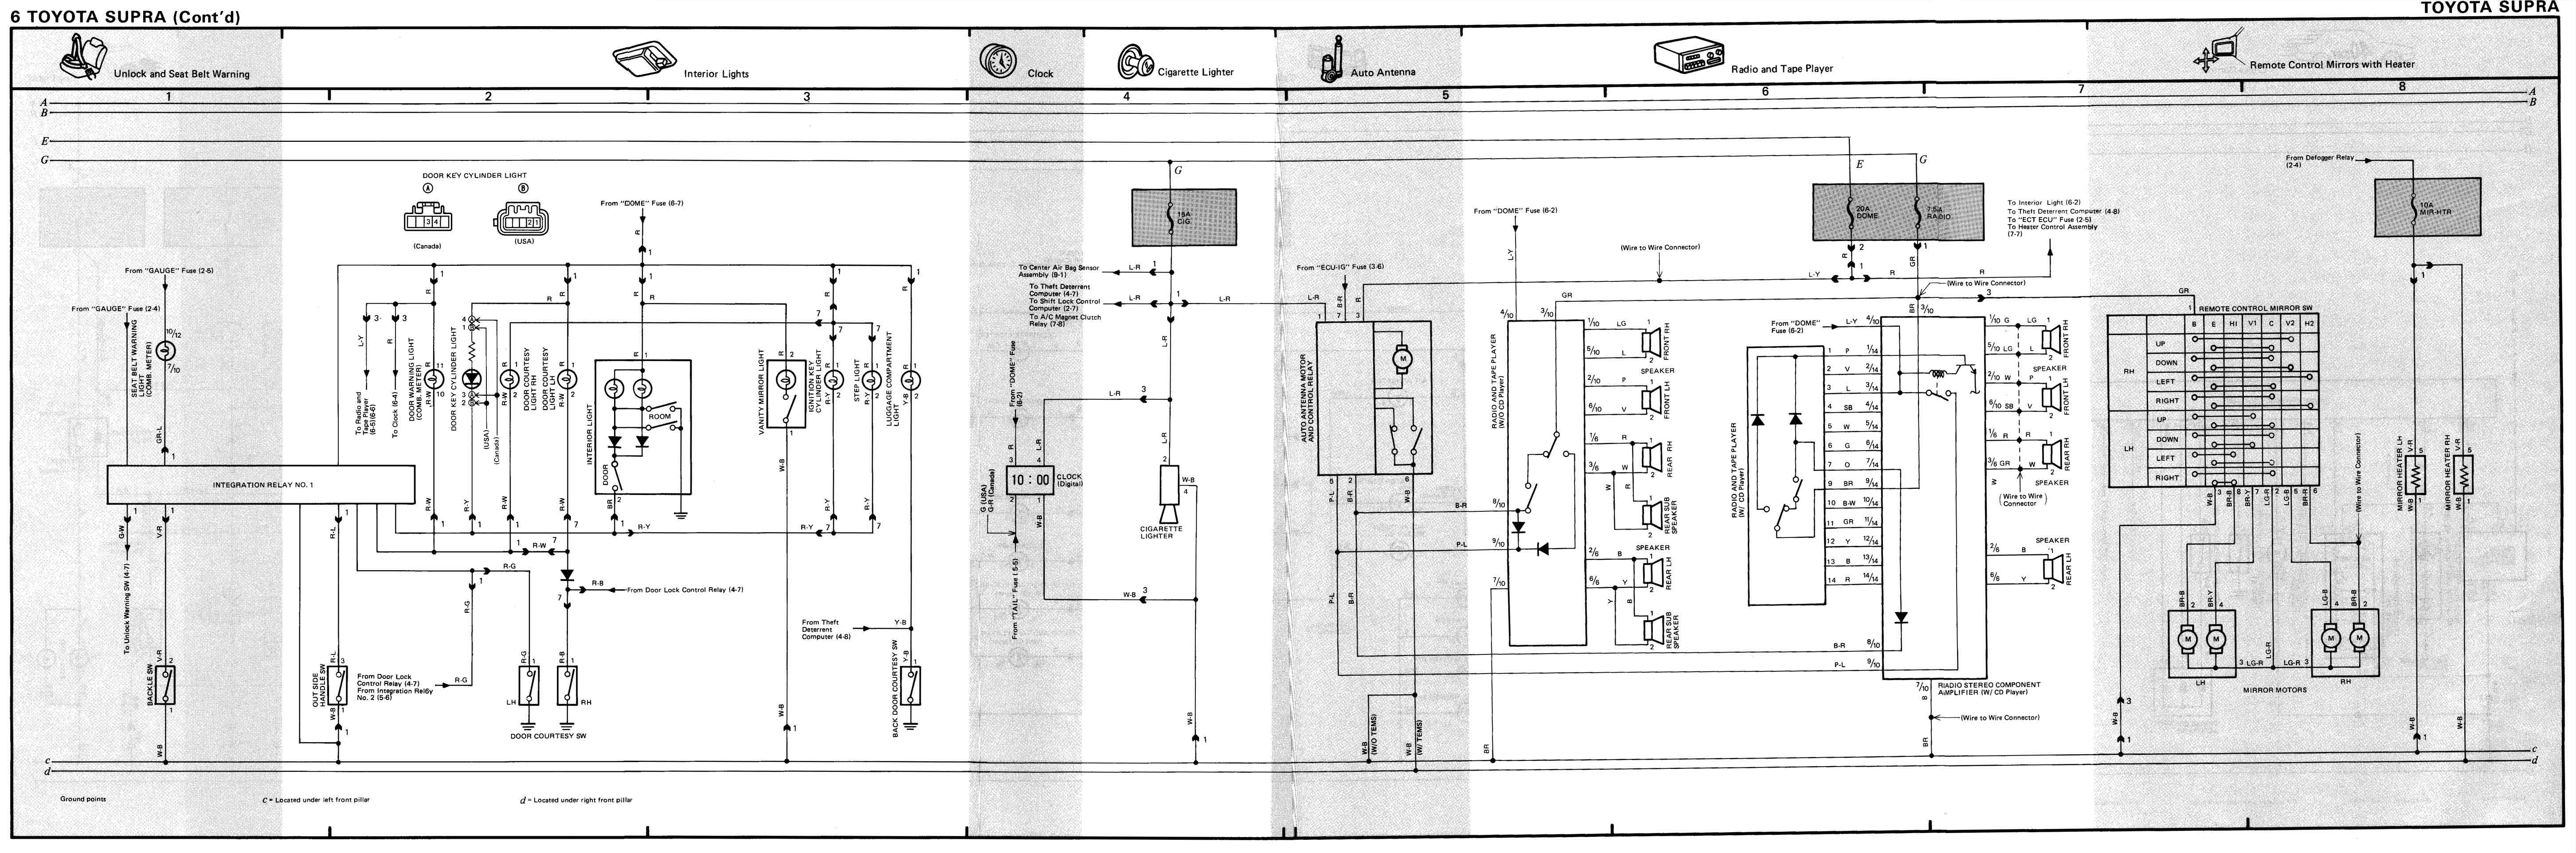 92 Toyota Pickup Wiring Diagram from lh5.googleusercontent.com